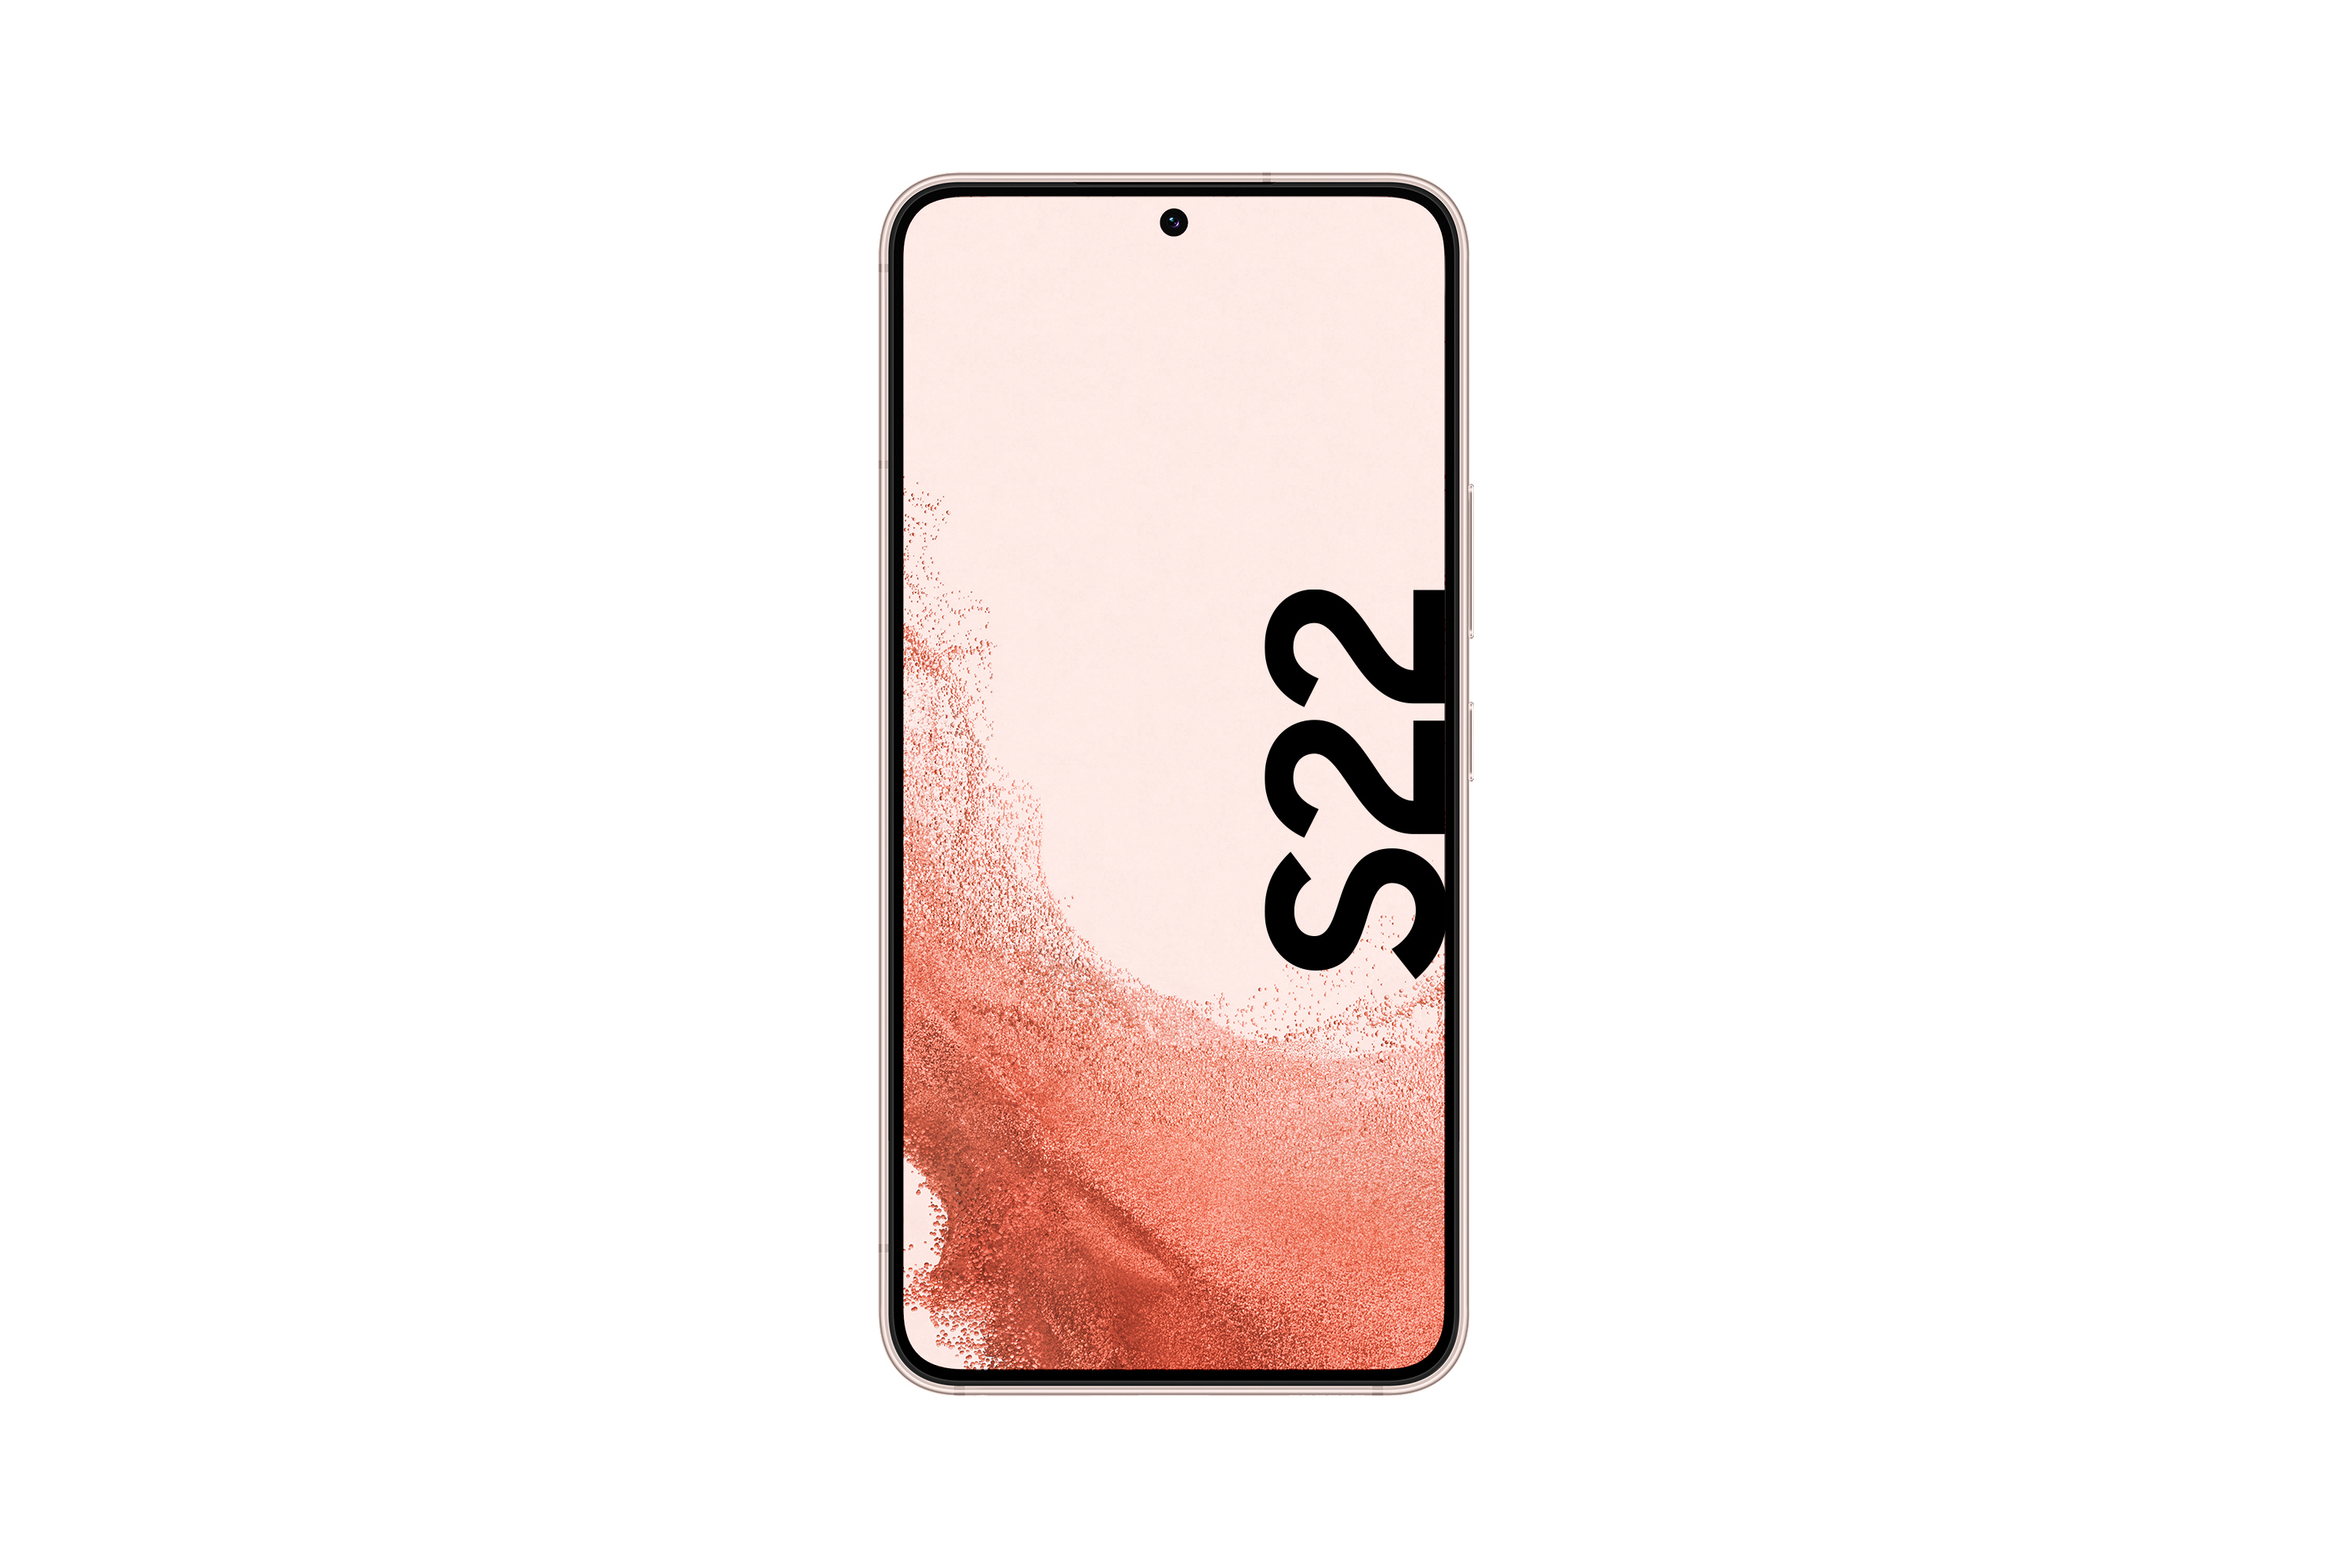 5G Gold SIM SAMSUNG GB 256 Galaxy Pink Dual S22